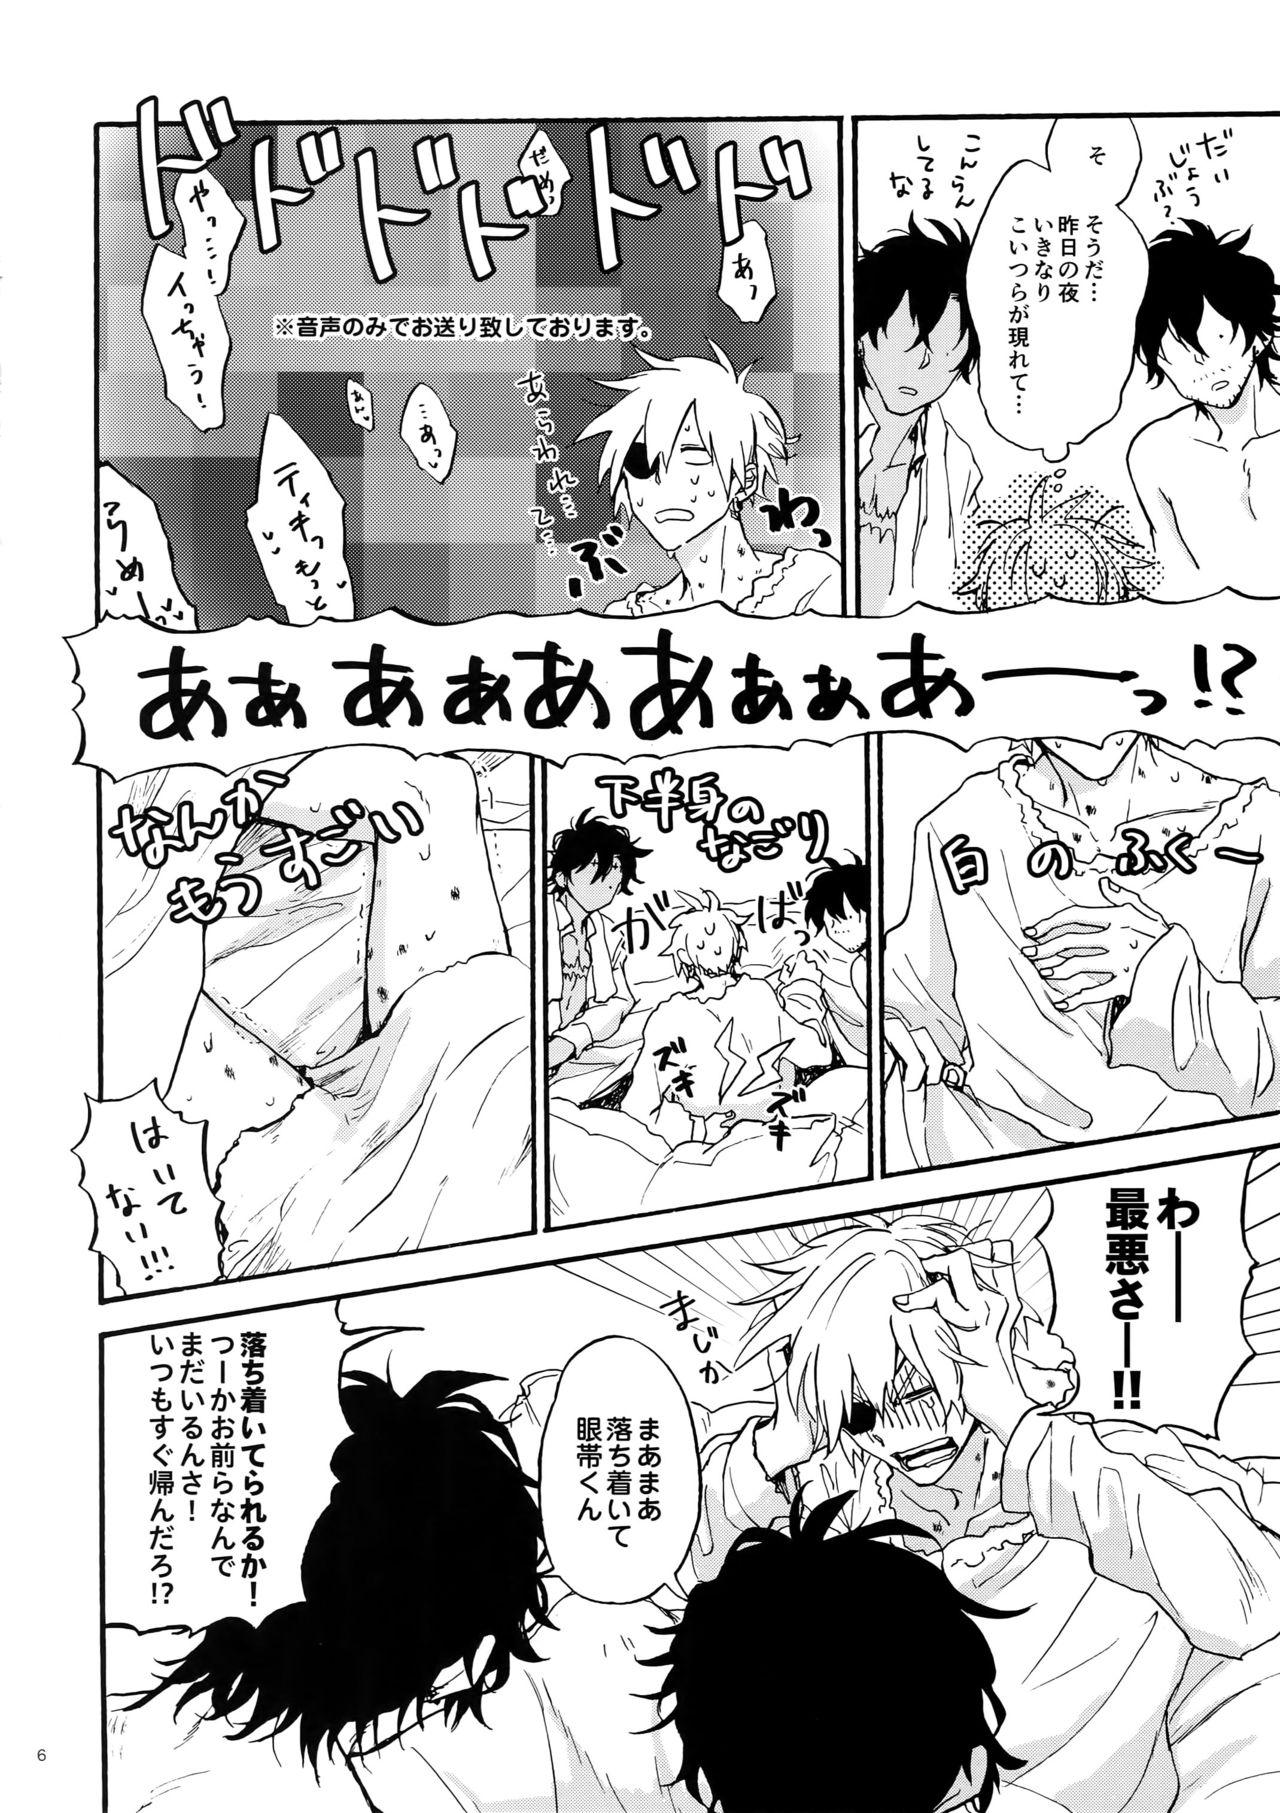 Travesti Shiro to Kuro to ore - D.gray-man Cameltoe - Page 5